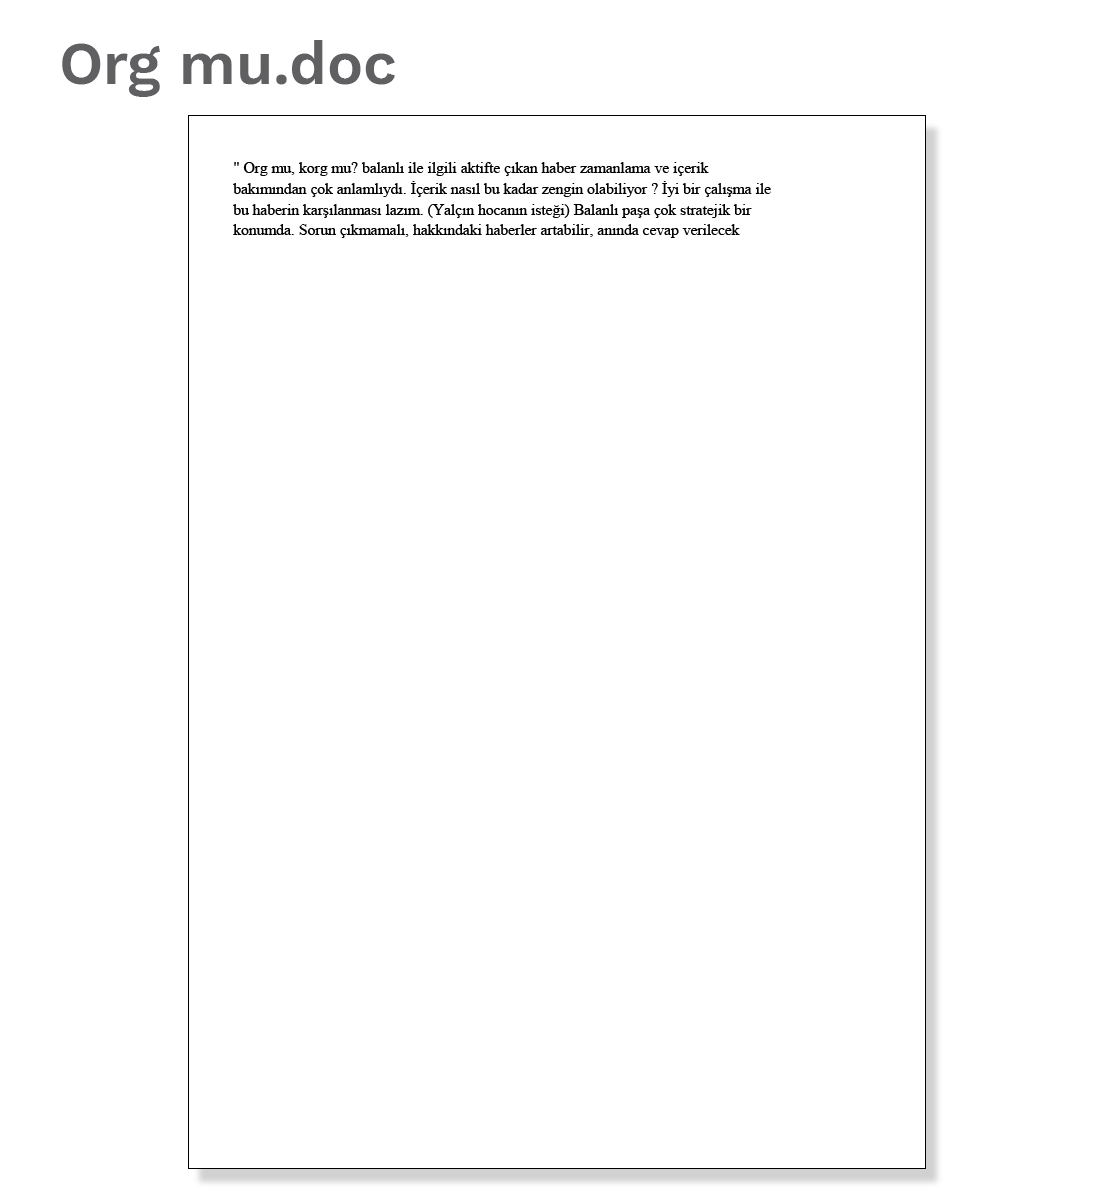 Document 5: Org mu.doc